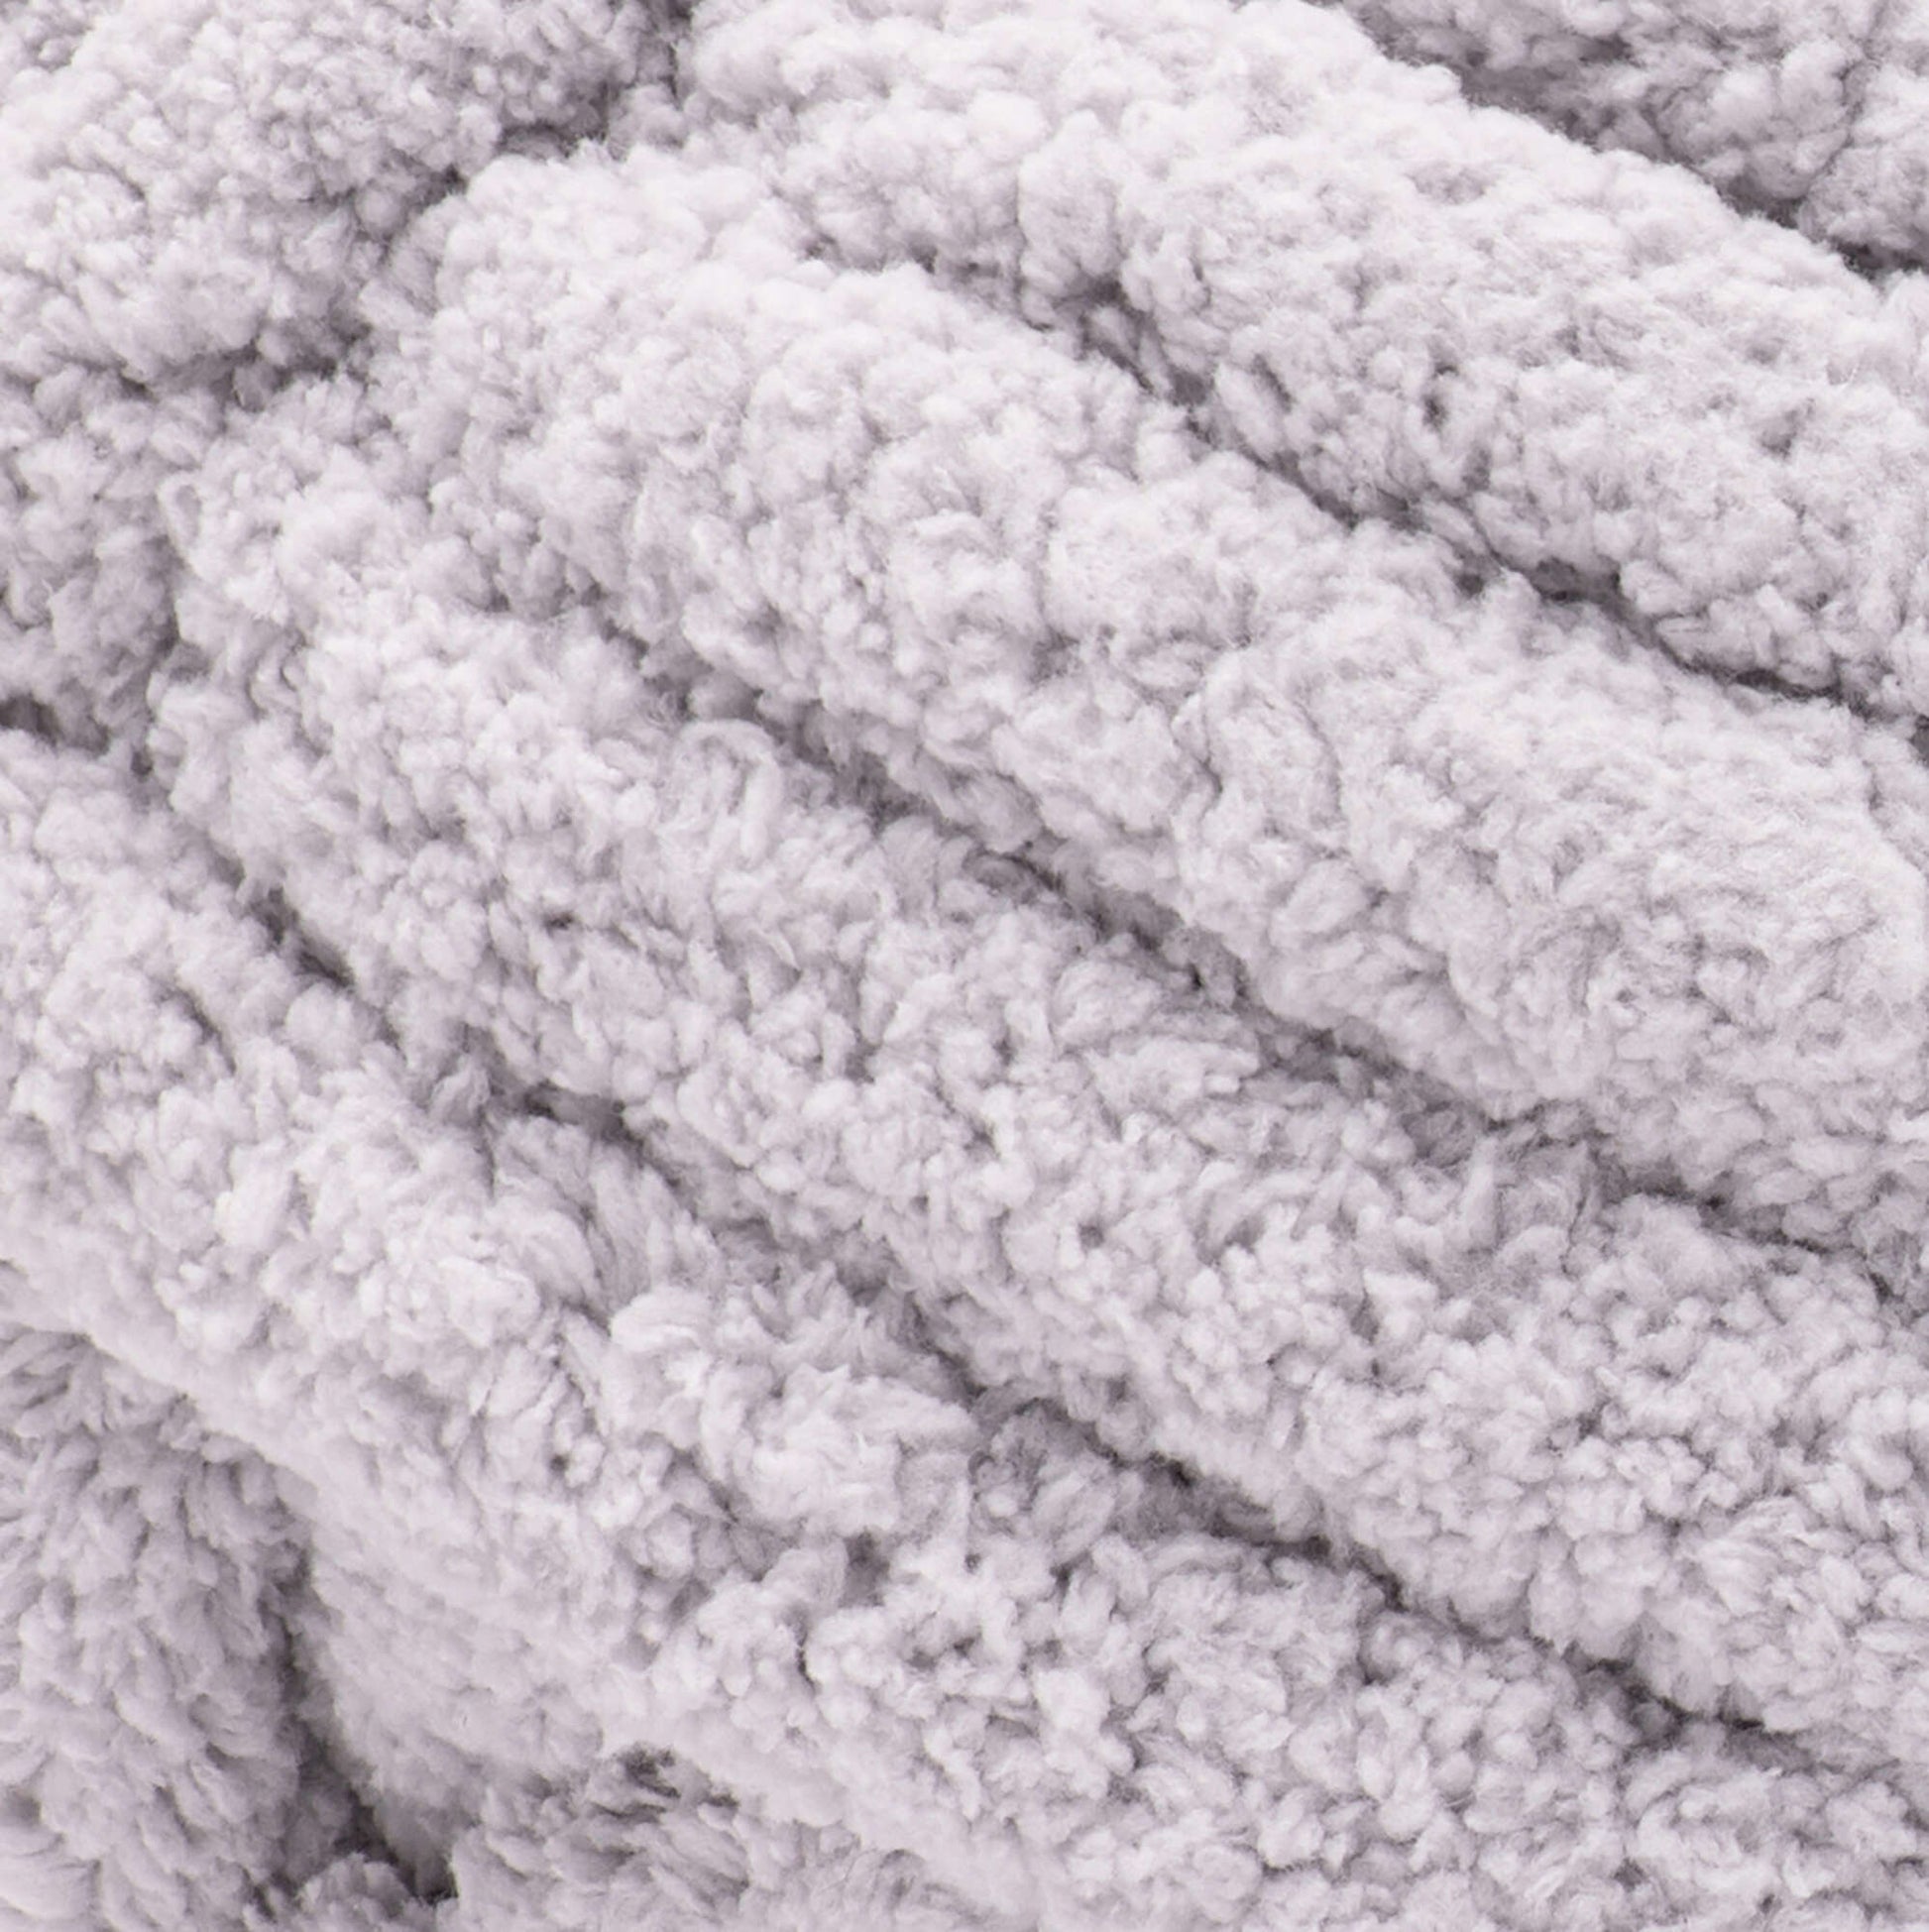 Bernat Blanket Big Yarn (300g/10.5oz) Earl Gray